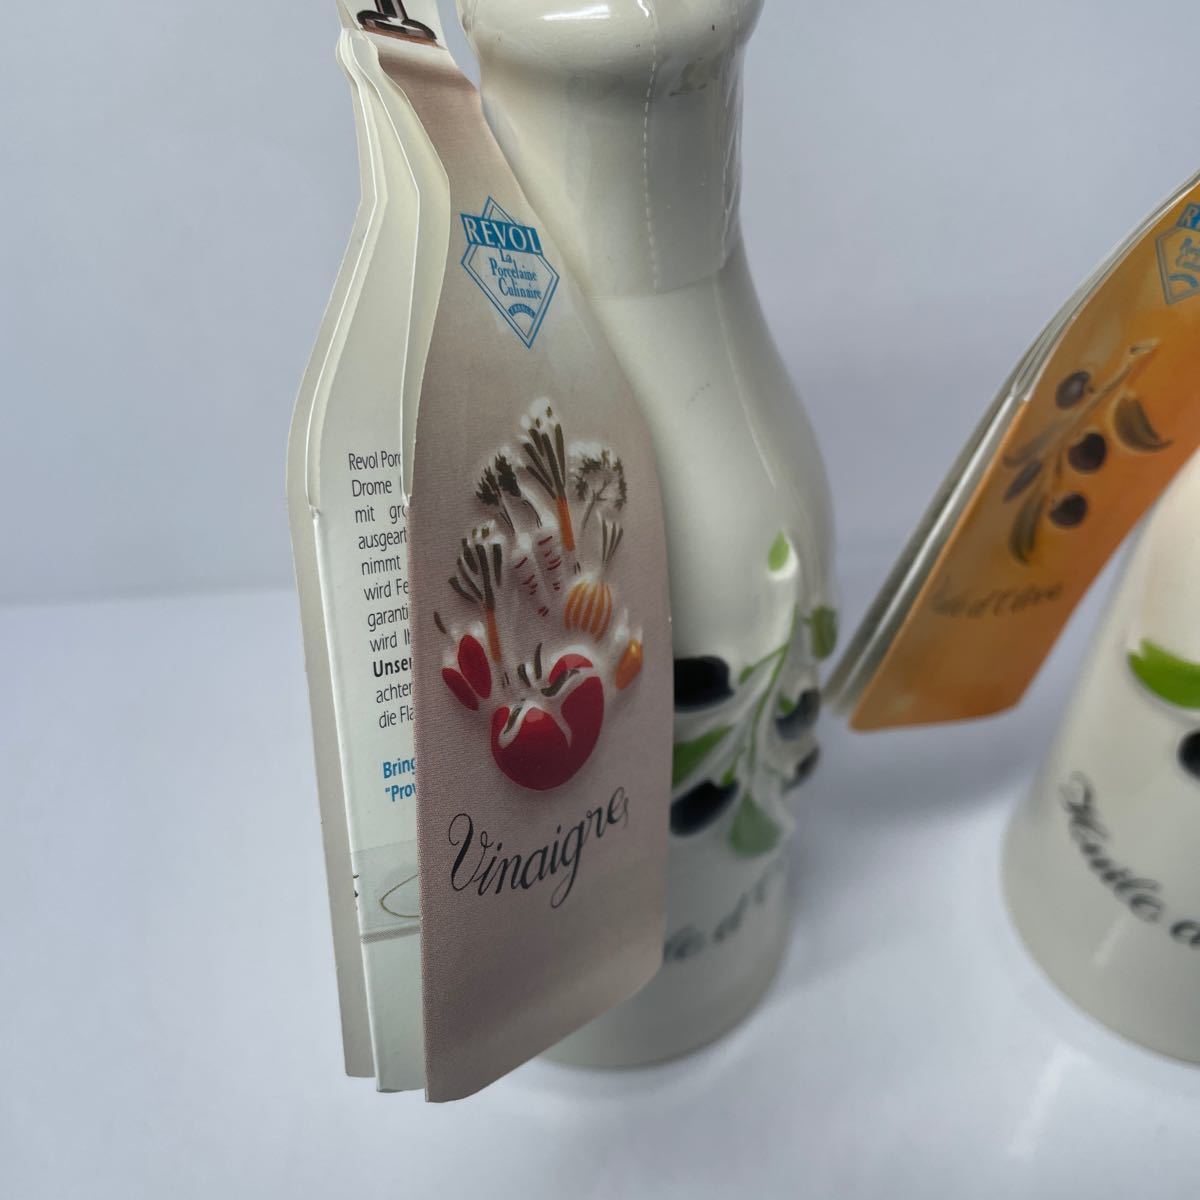  France revol company PROVENCE vinegar & olive oil bottle 2. bottle ceramics 